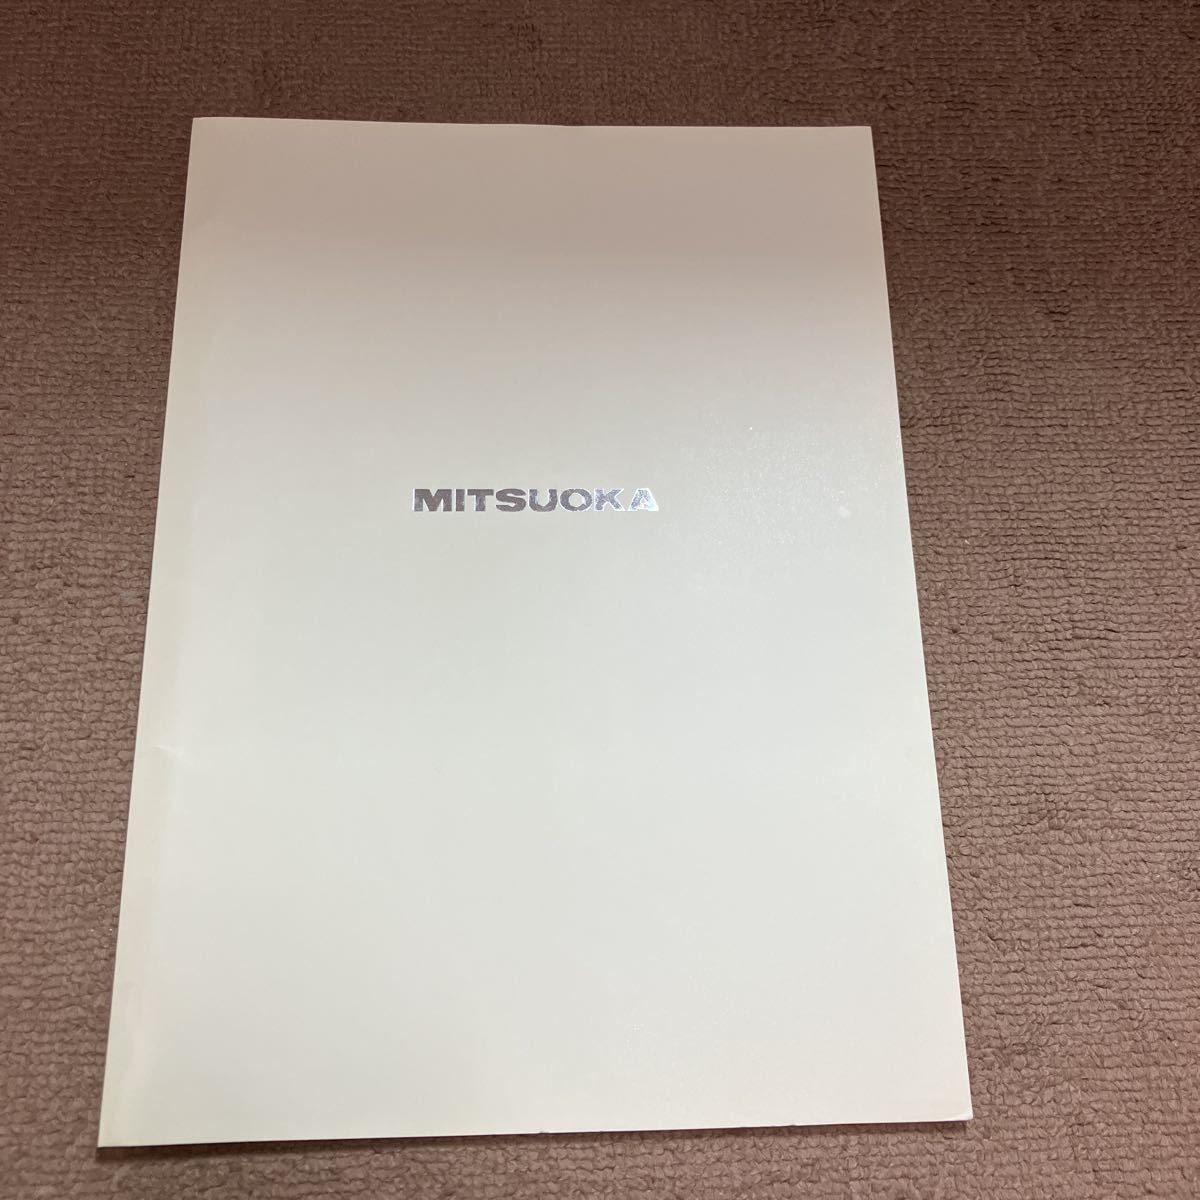  Mitsuoka Motor file paper made 